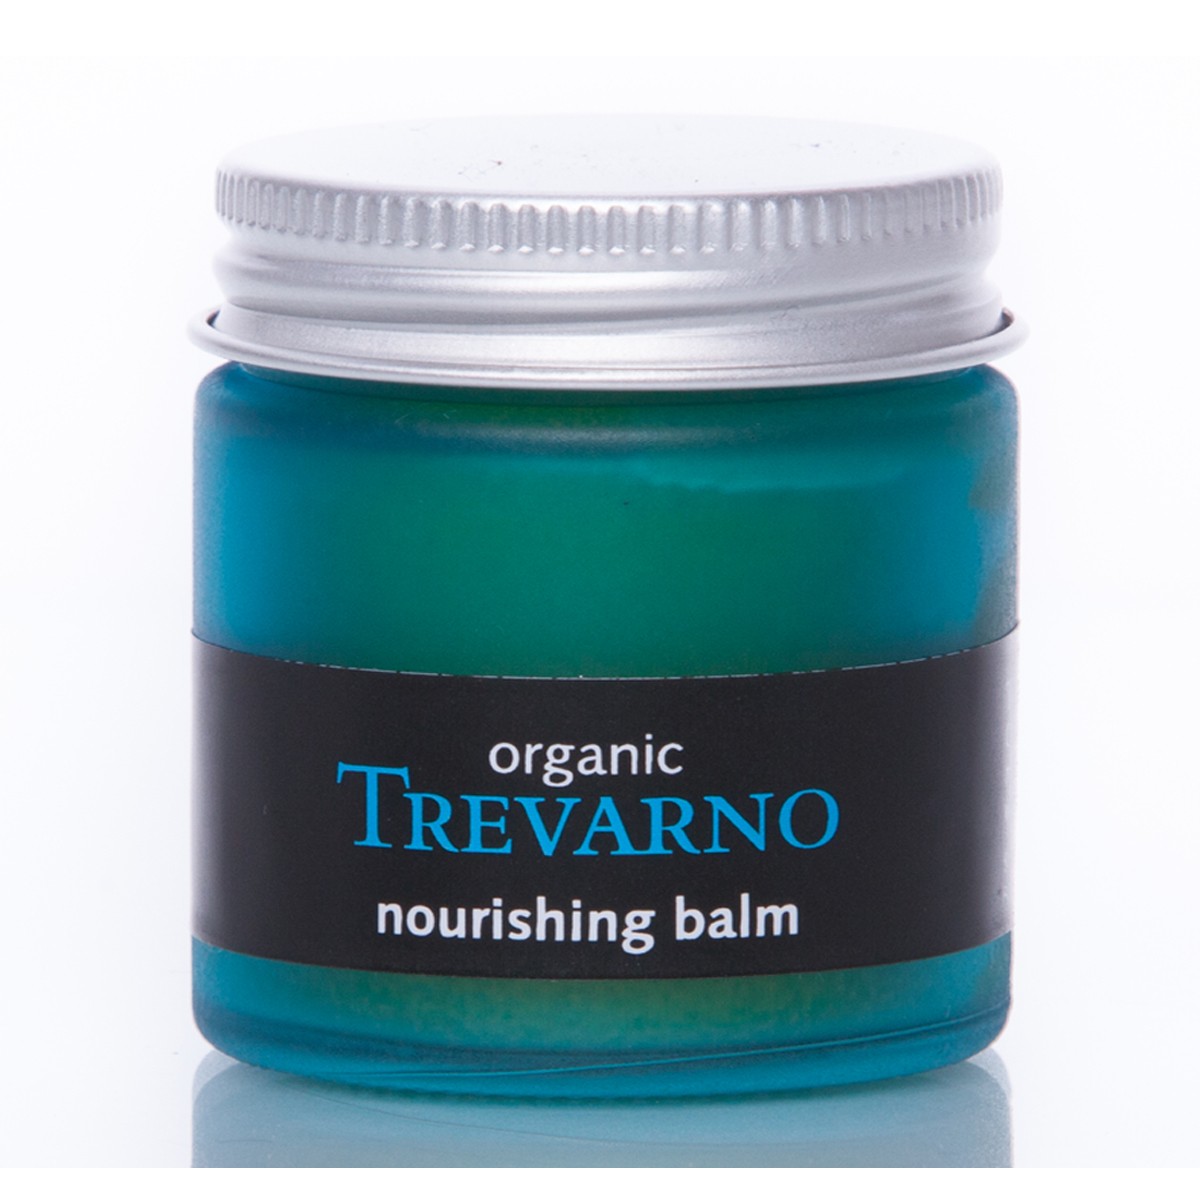 Organic Trevarno Nourishing Balm